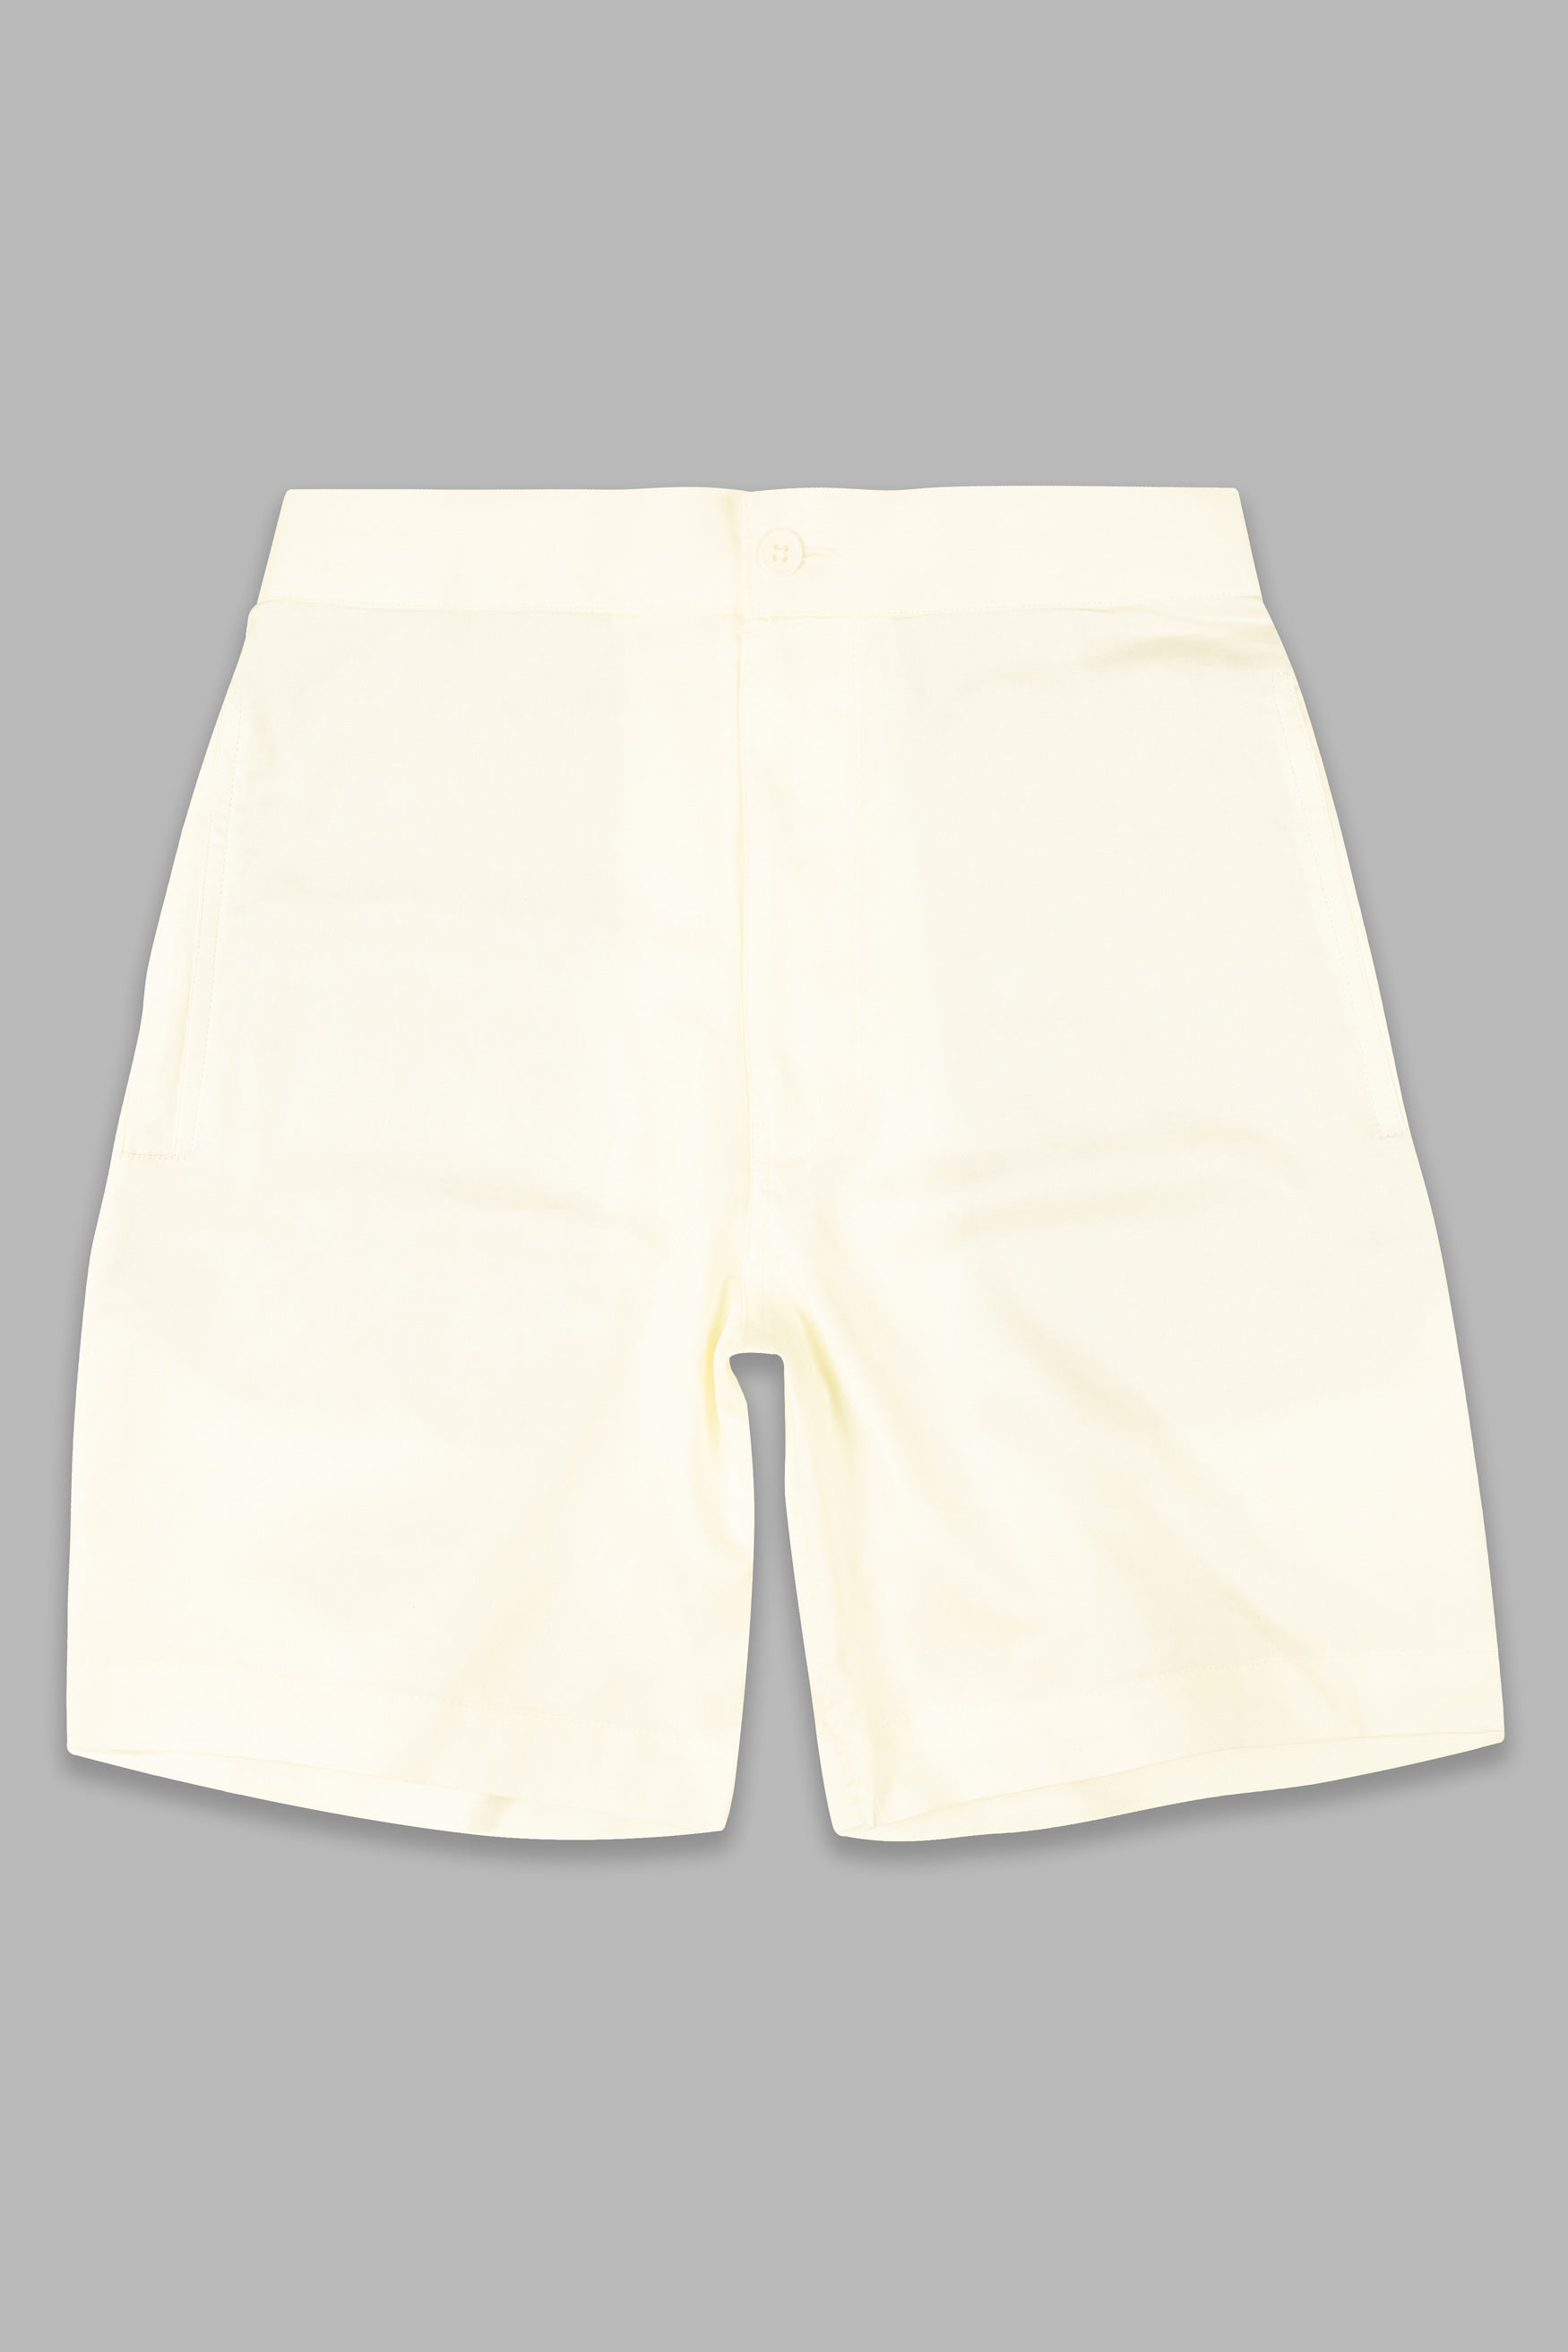 Beige Subtle Sheen Super Soft Premium Cotton Shorts SR328-28,  SR328-30,  SR328-32,  SR328-34,  SR328-36,  SR328-38,  SR328-40,  SR328-42,  SR328-44